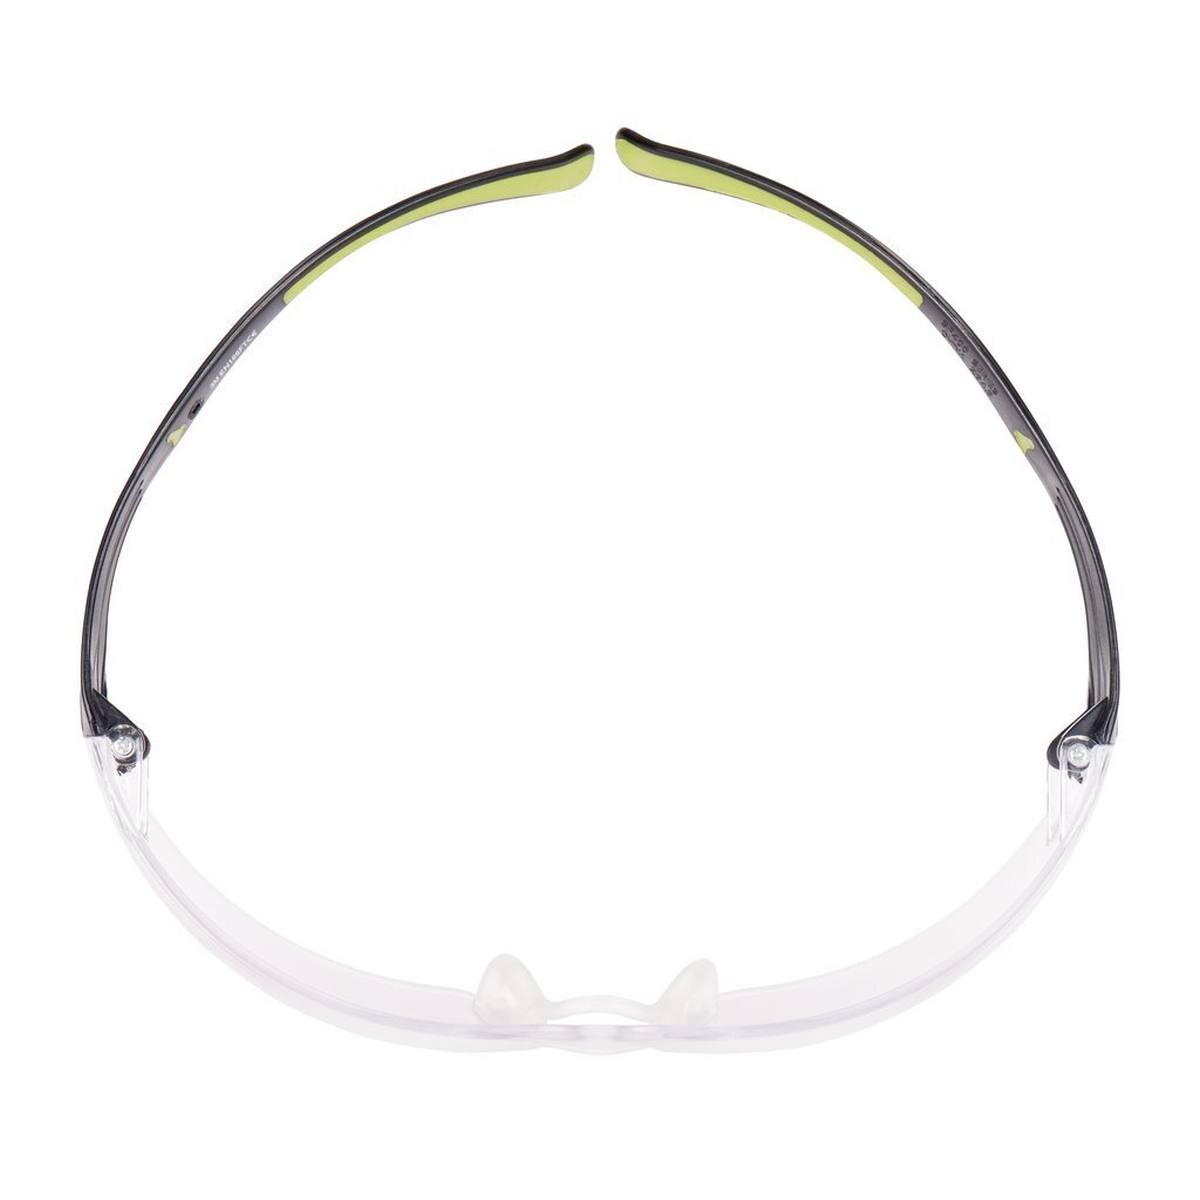 3M Gafas de protección SecureFit 400, patillas negras/verdes, tratamiento antirrayas/antivaho, lentes transparentes, SF401AS/AF-EU